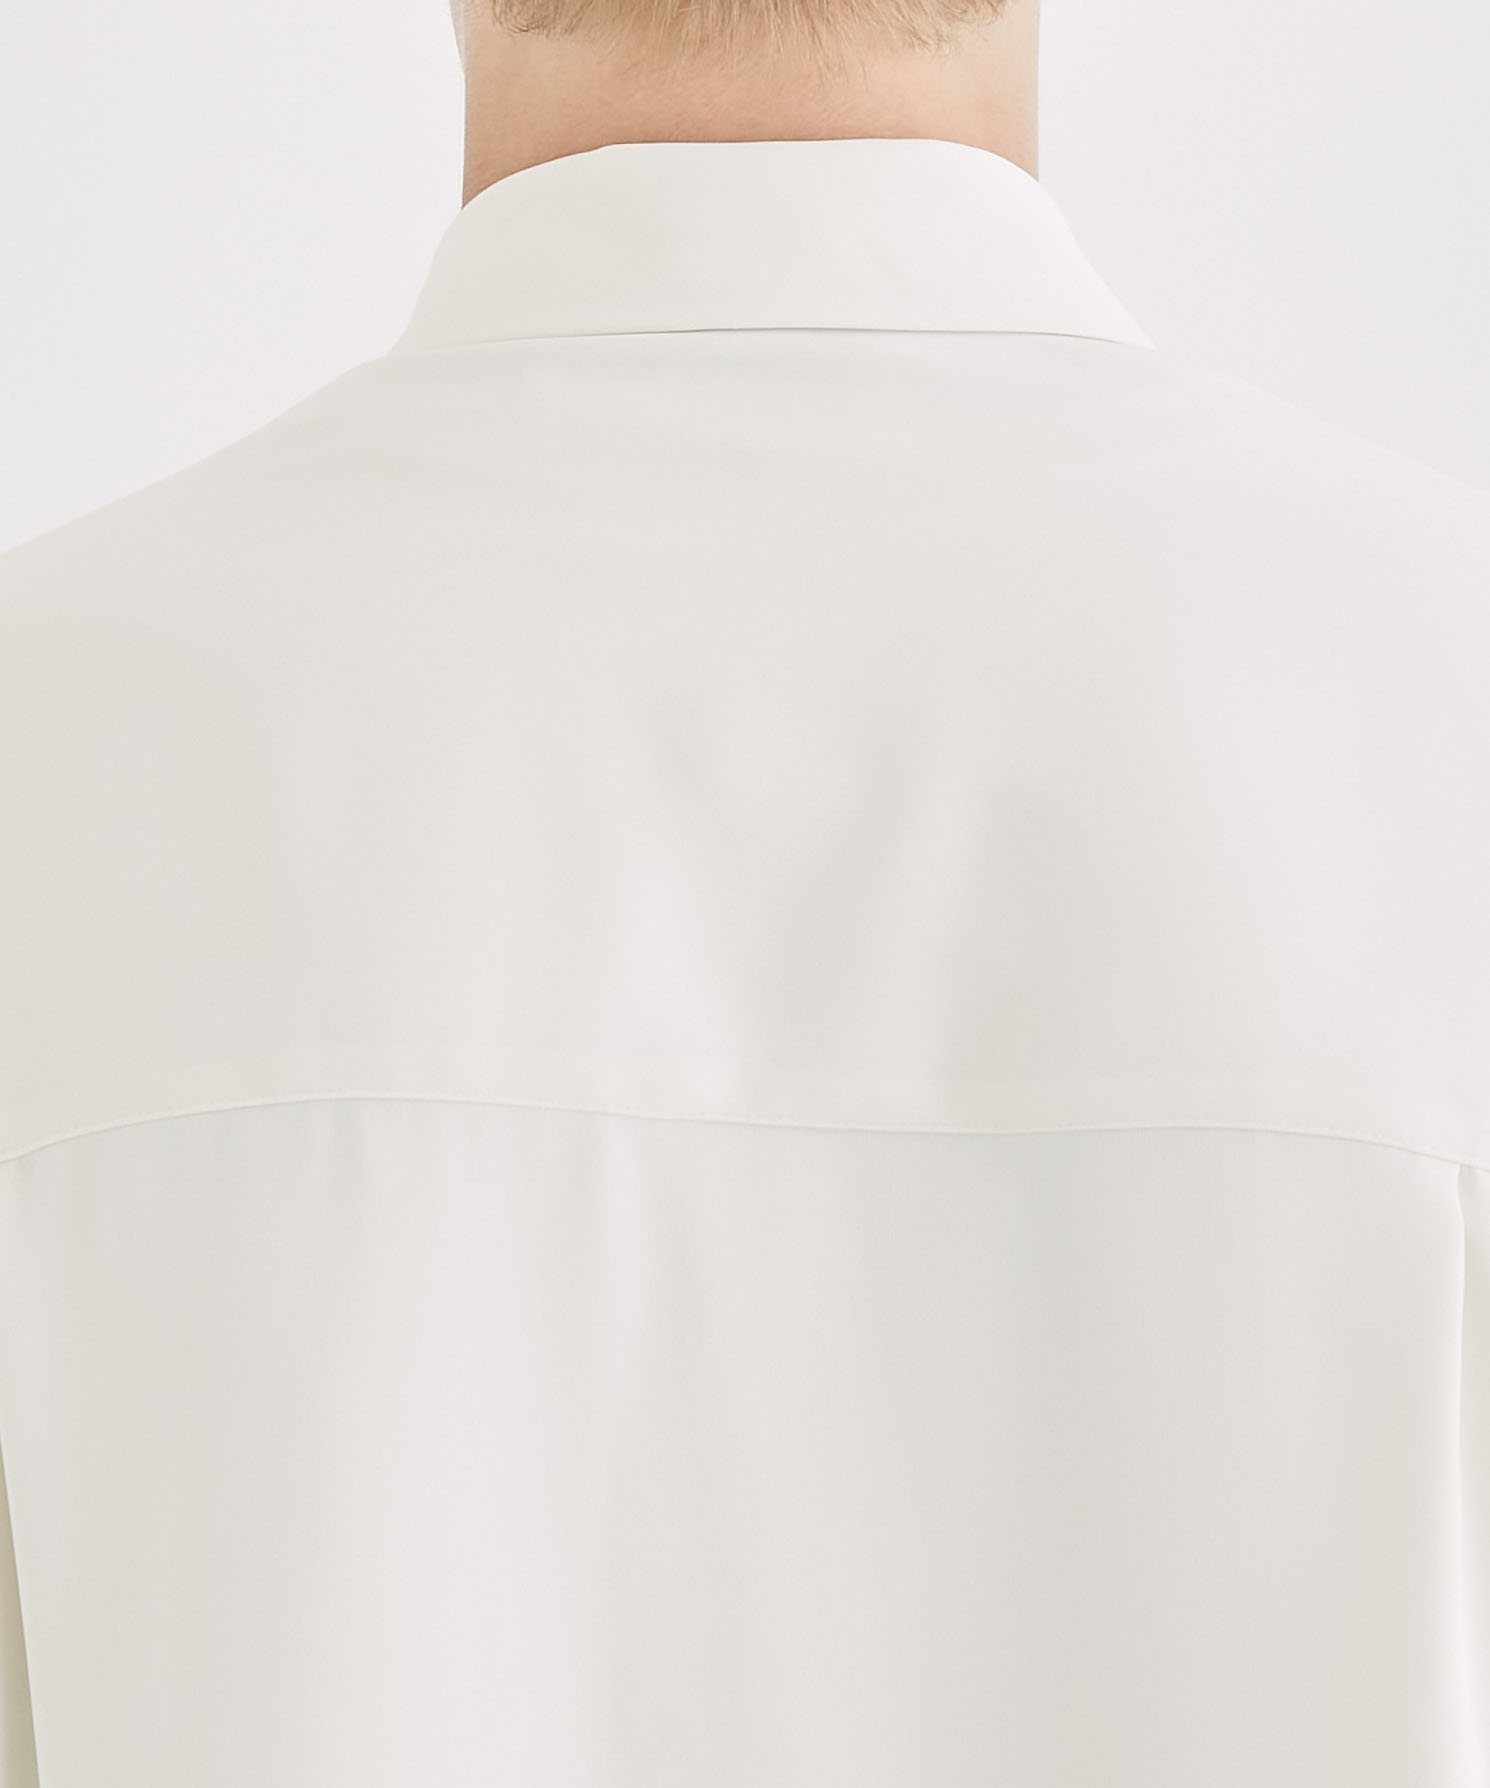 CULLNI 2019ssジップアップポケットシャツ - シャツ